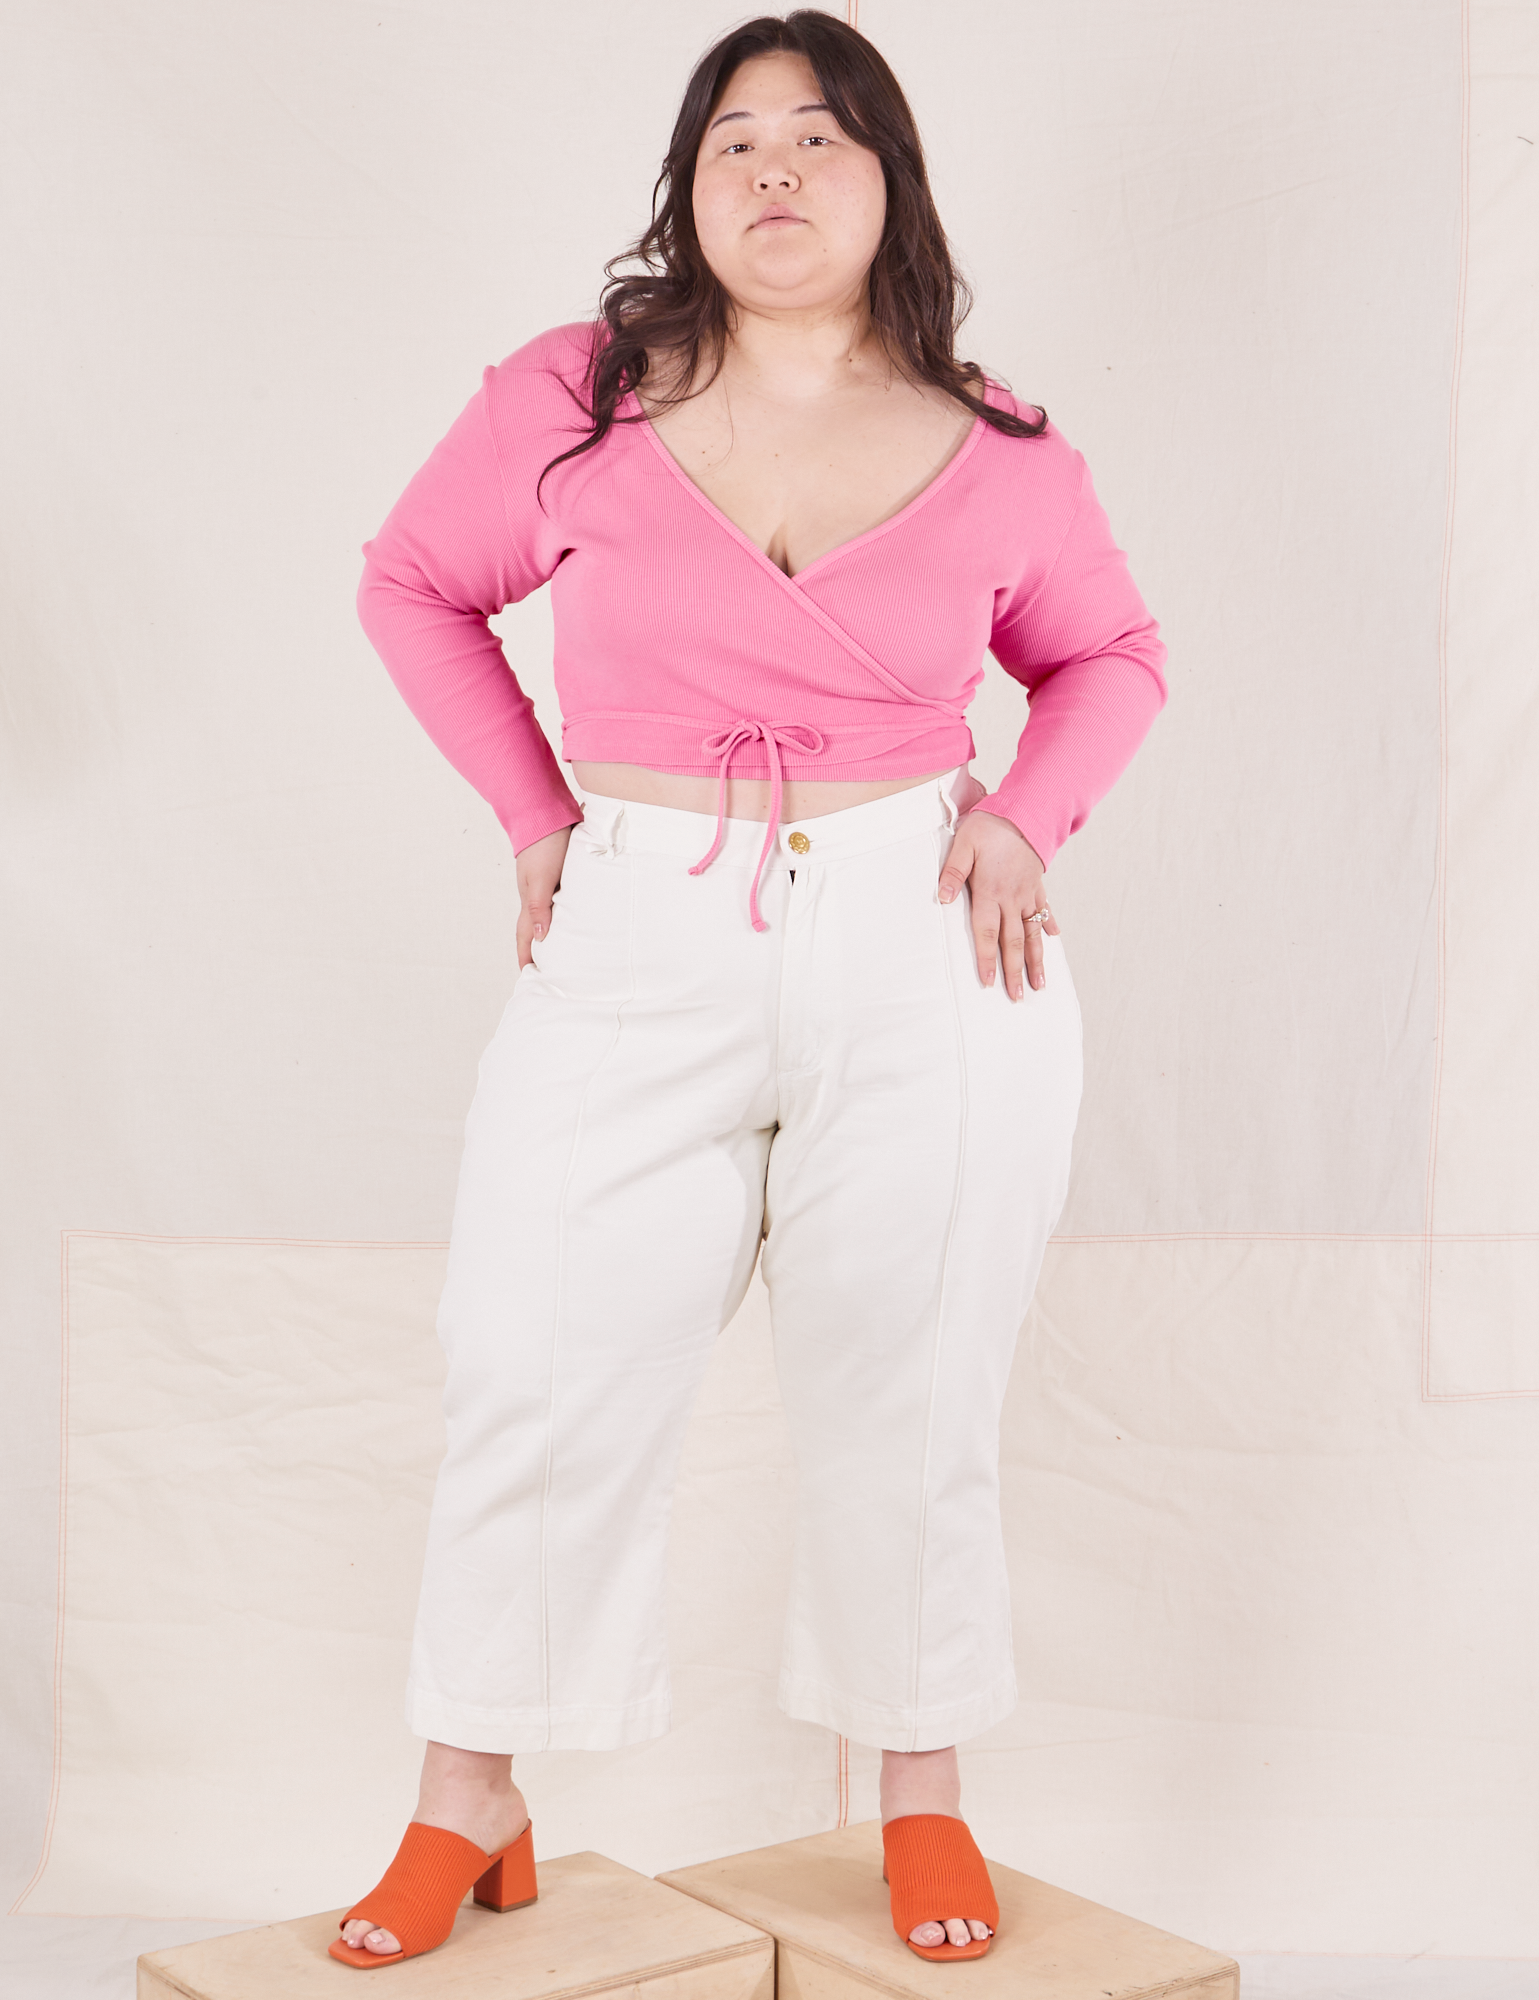 Wrap Top in Bubblegum Pink on Ashley wearing vintage tee off-white Western Pants